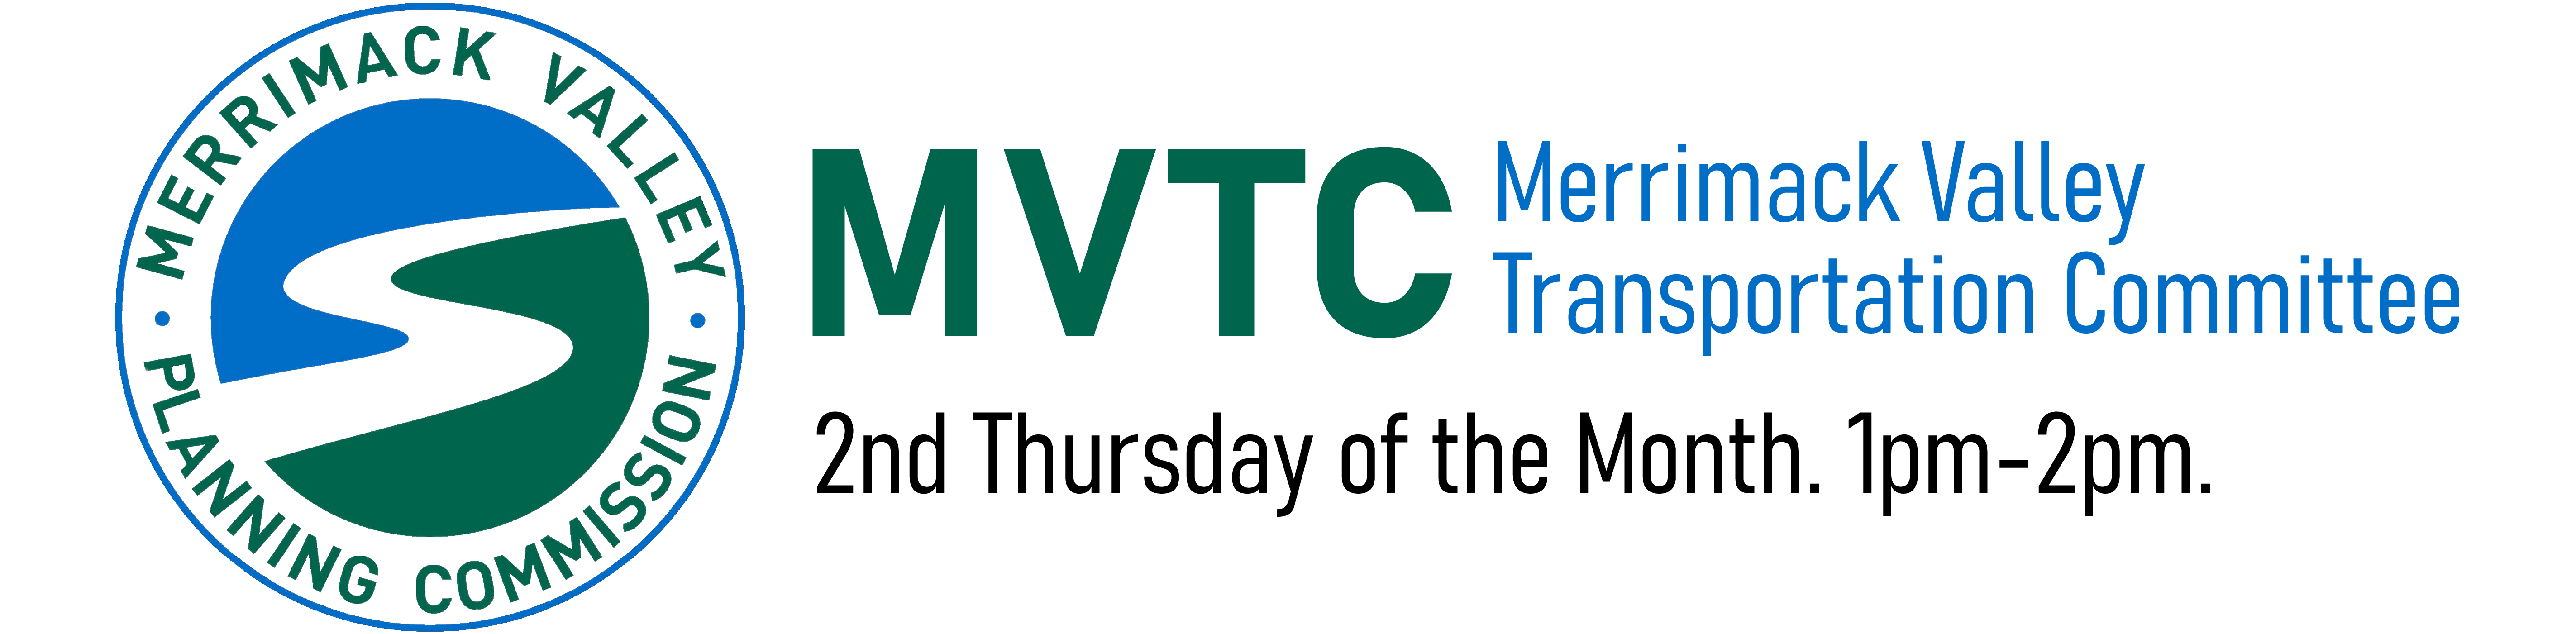 Merrimack Valley Transportation Committee Meeting